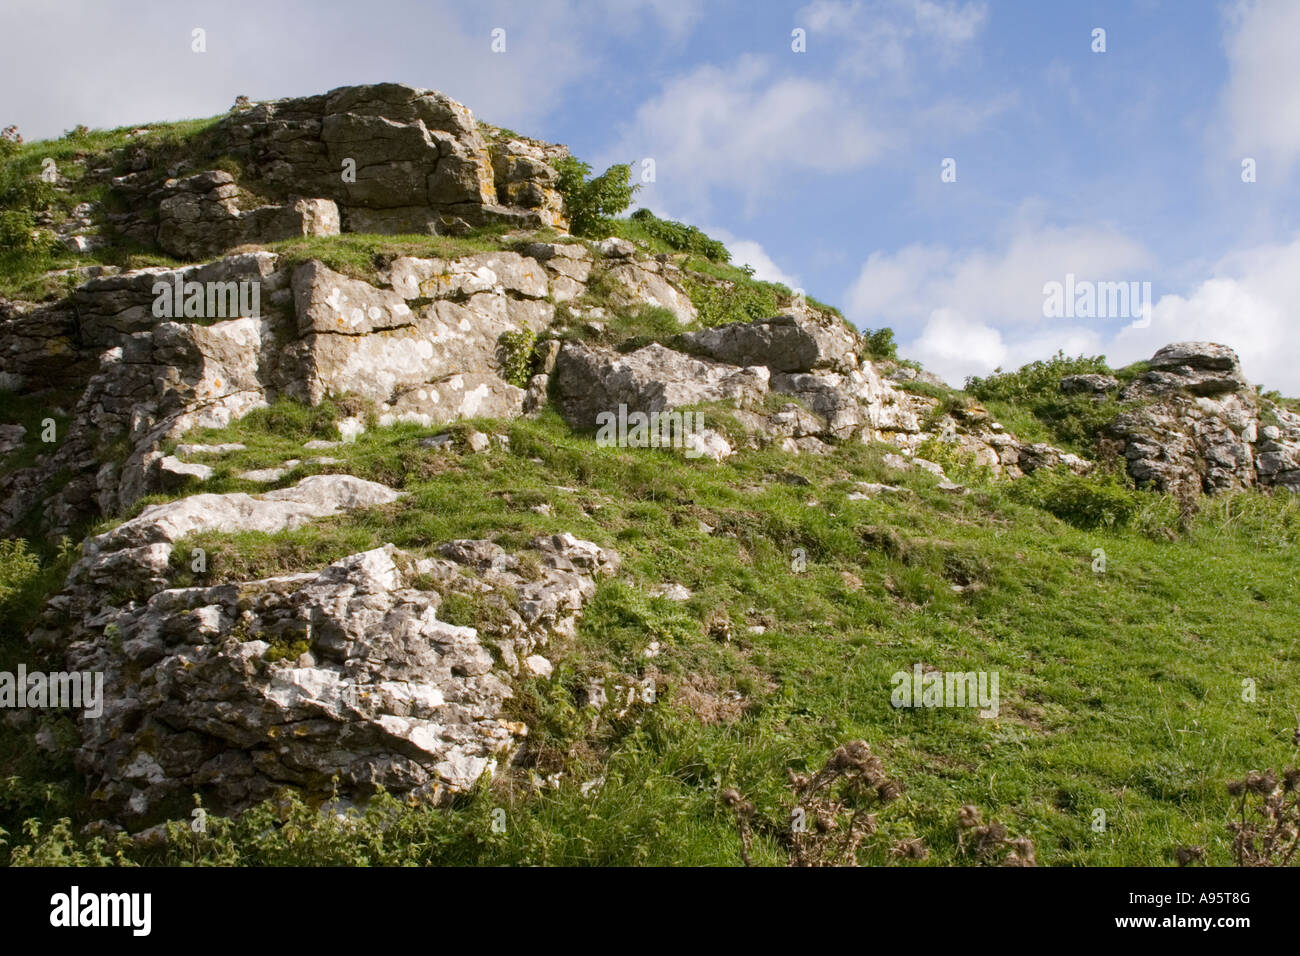 Limestone rocks set against a blue sky overlooking the Winnats Pass near Castleton in Derbyshire. Stock Photo